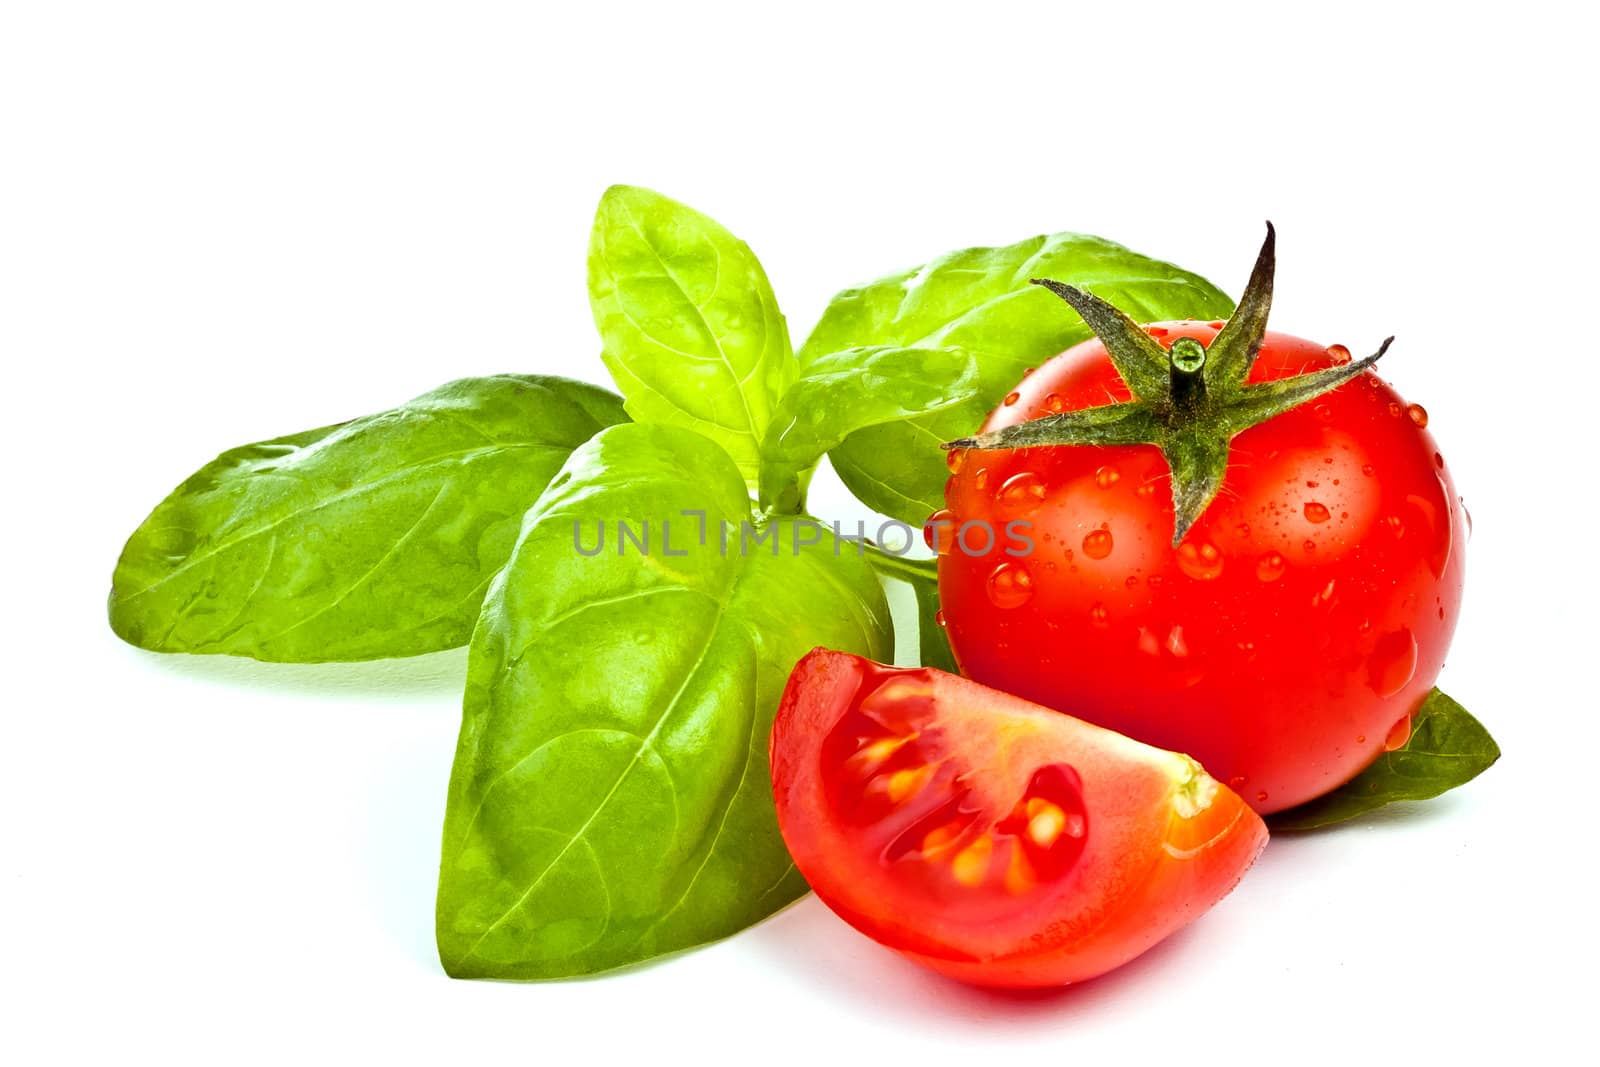 tomato of Pachino and basil by maxg71